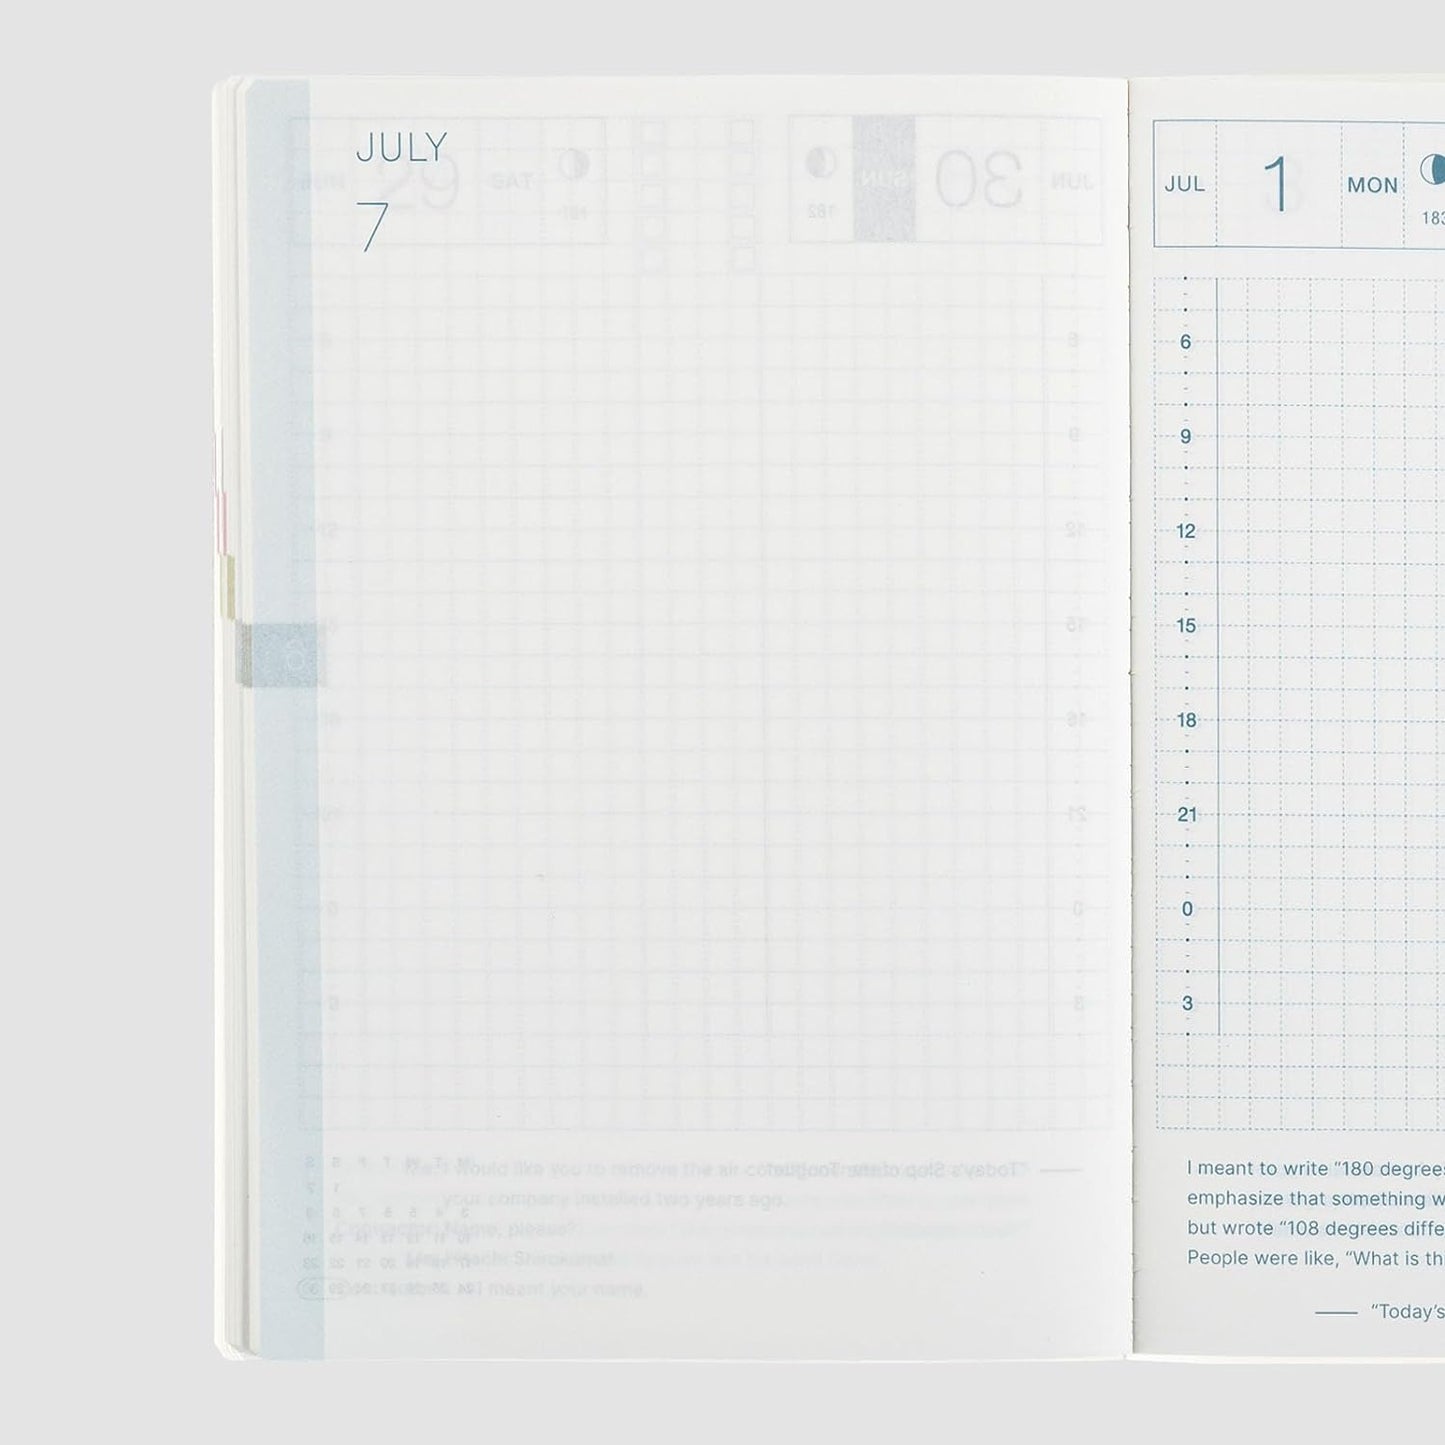 2024 Planner / HON A6 Paper Series (HOBONICHI TECHO)